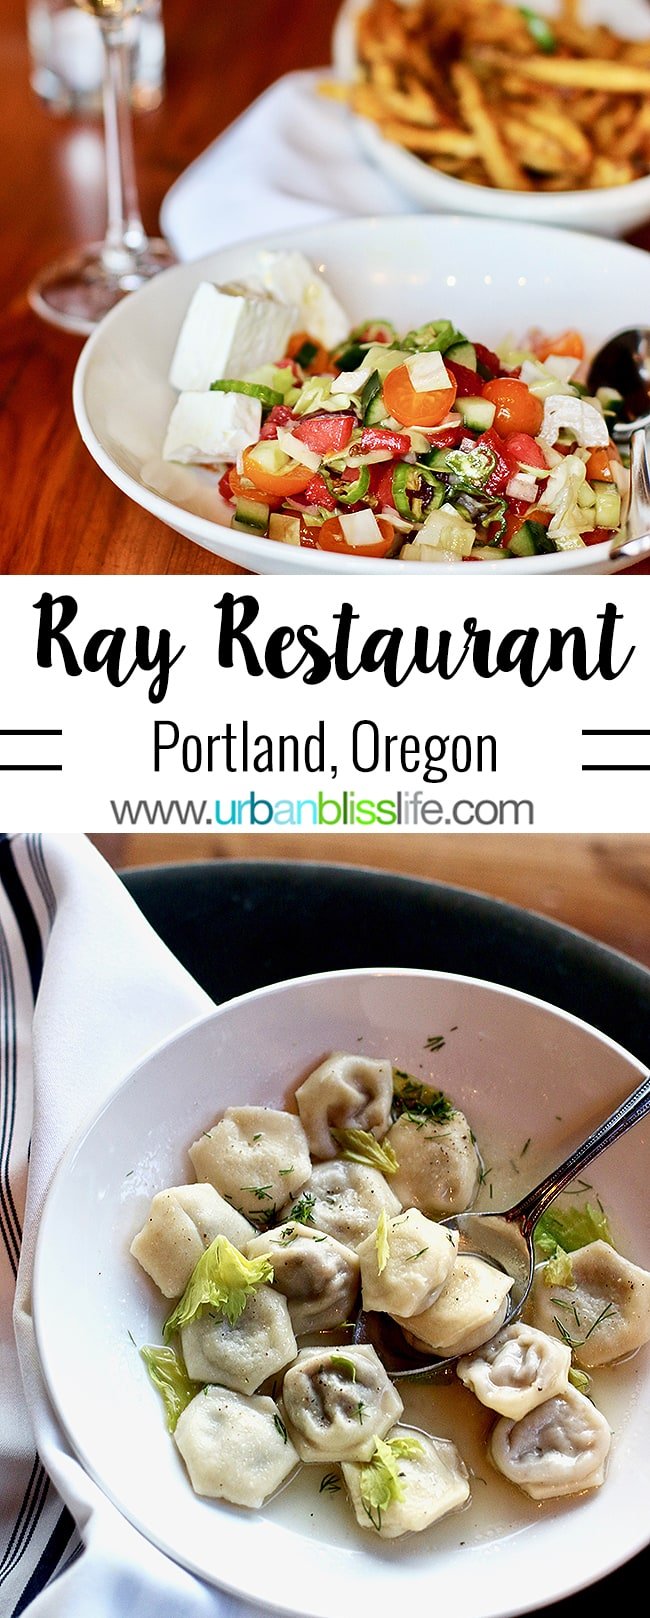 Ray restaurant, Israeli cuisine in Portland, Oregon. Restaurant review on UrbanBlissLife.com